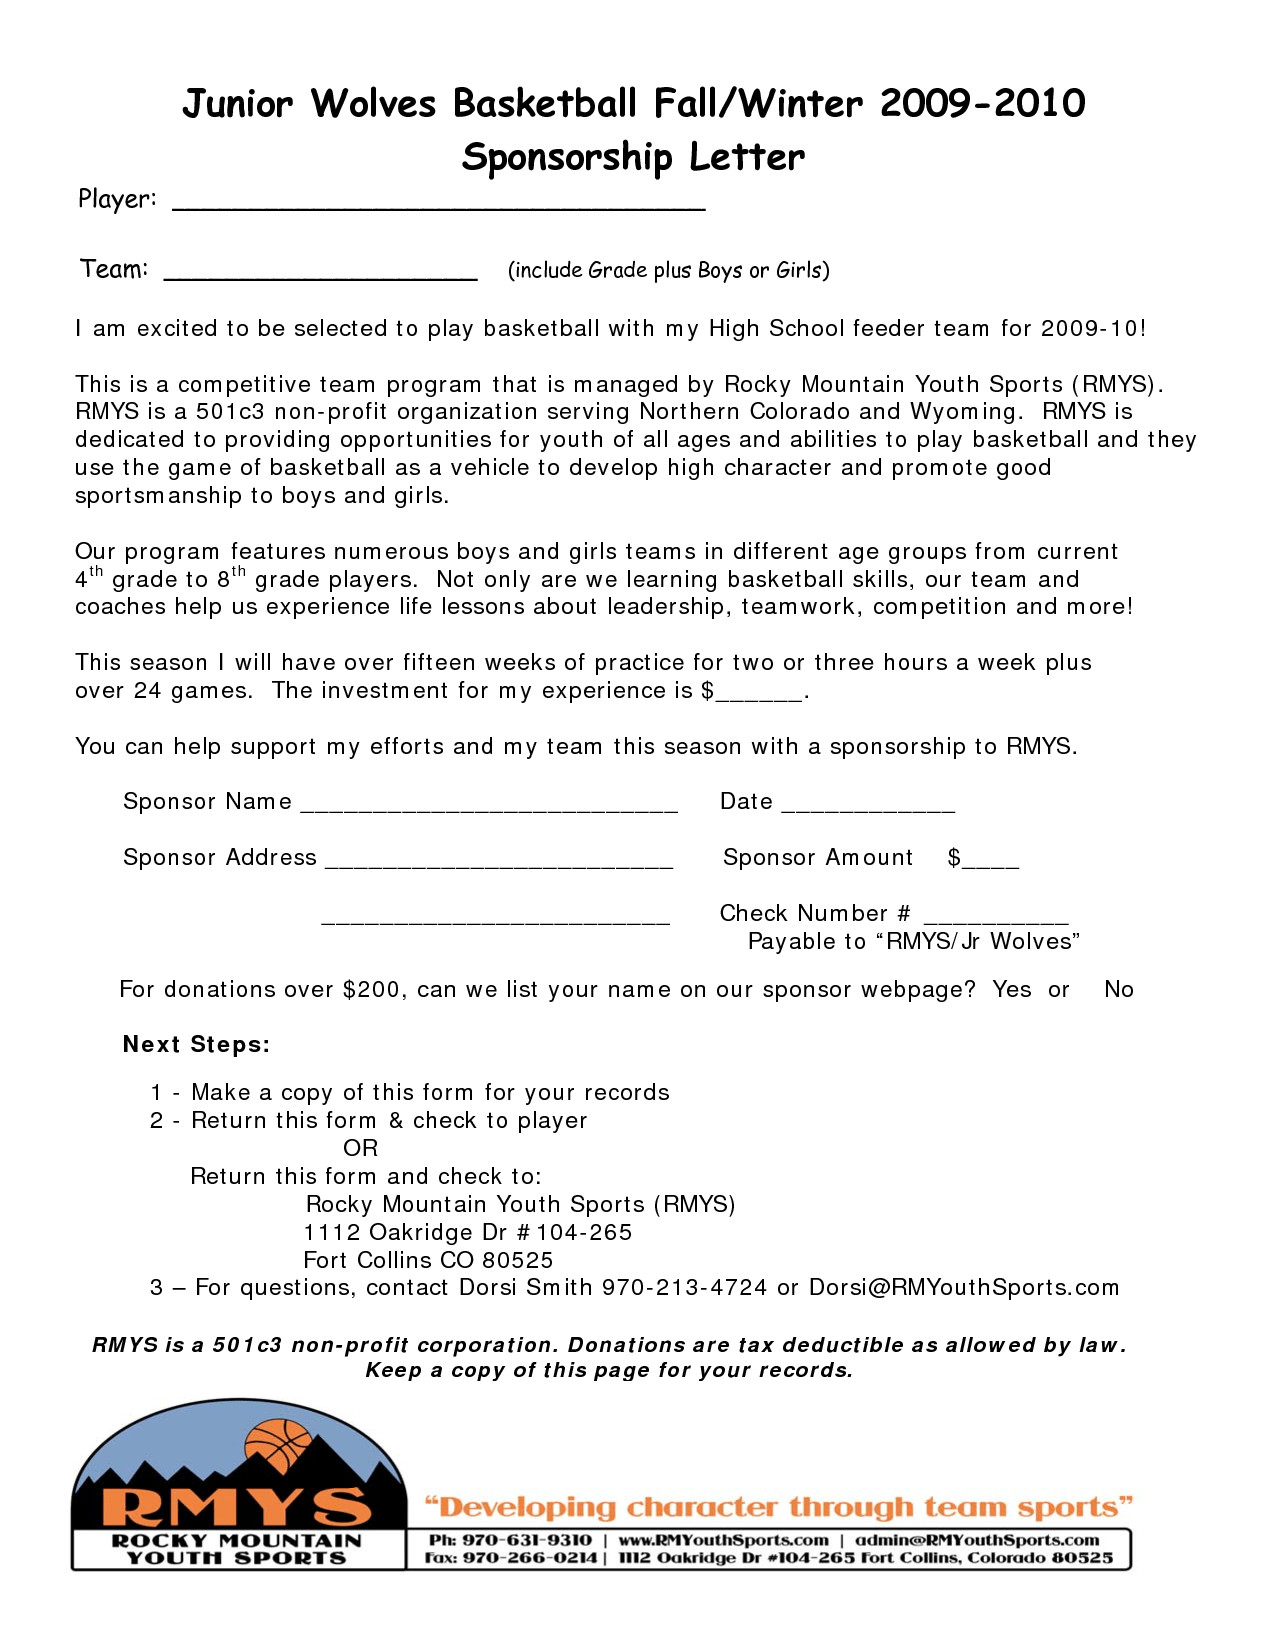 Sponsorship form for Sports Team Youth Sponsorship Letter Cover Letter Samples Cover